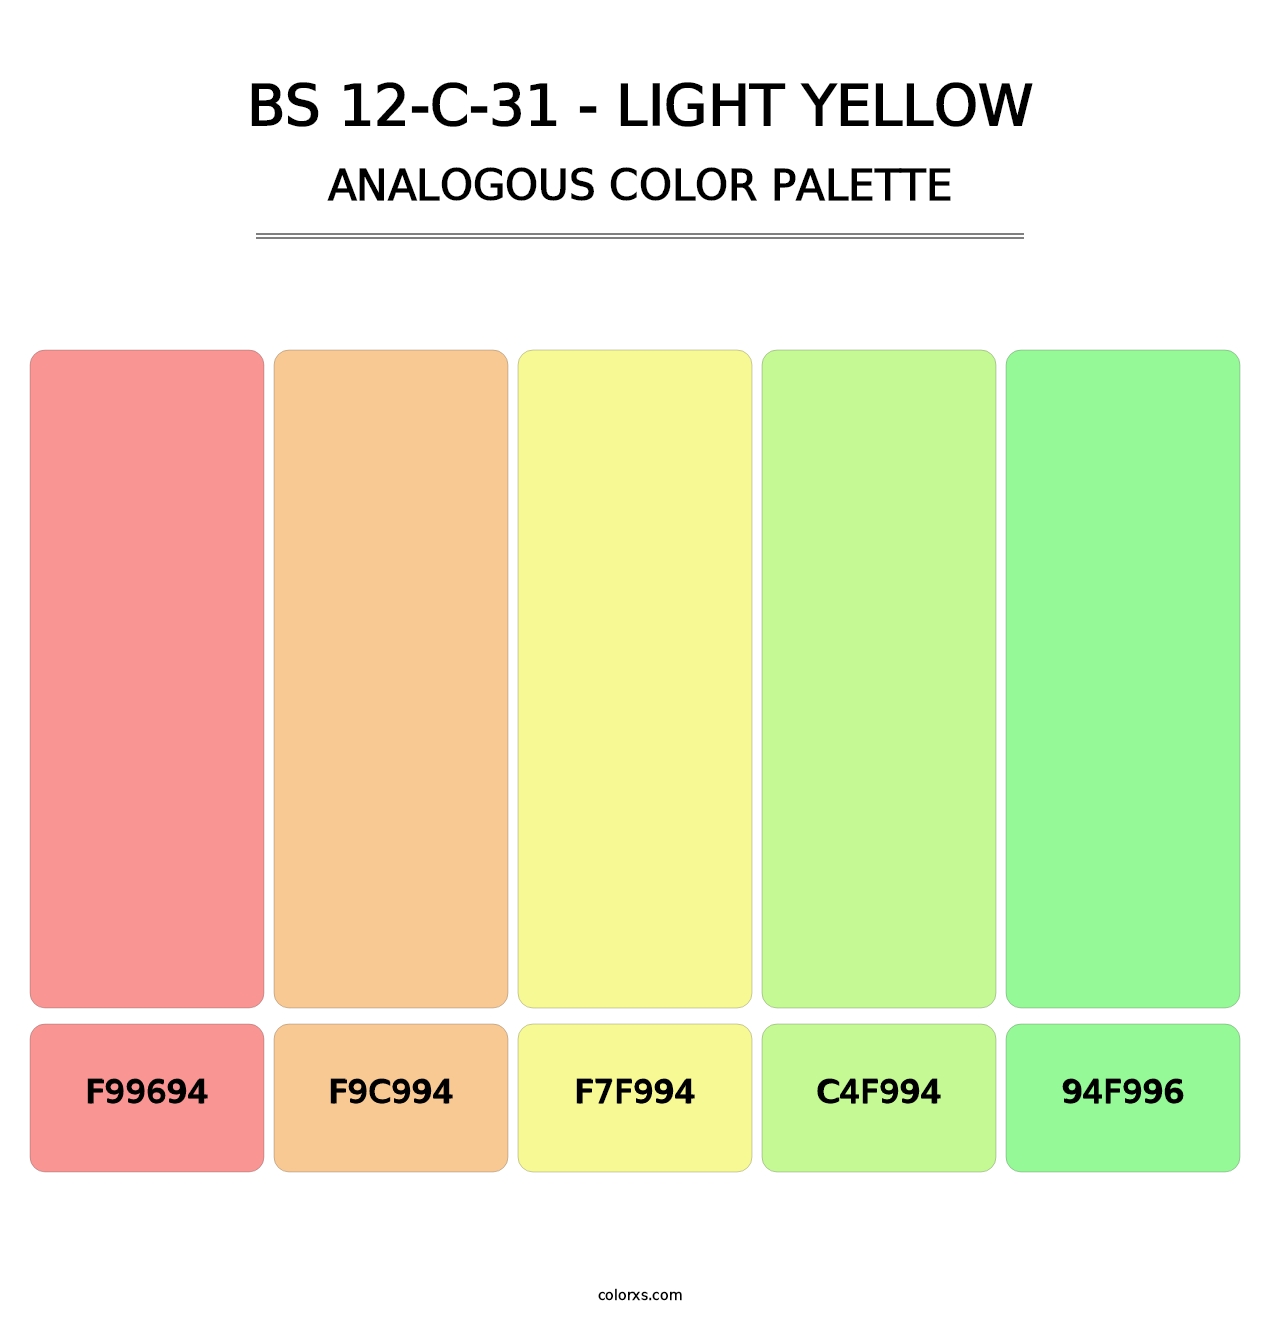 BS 12-C-31 - Light Yellow - Analogous Color Palette